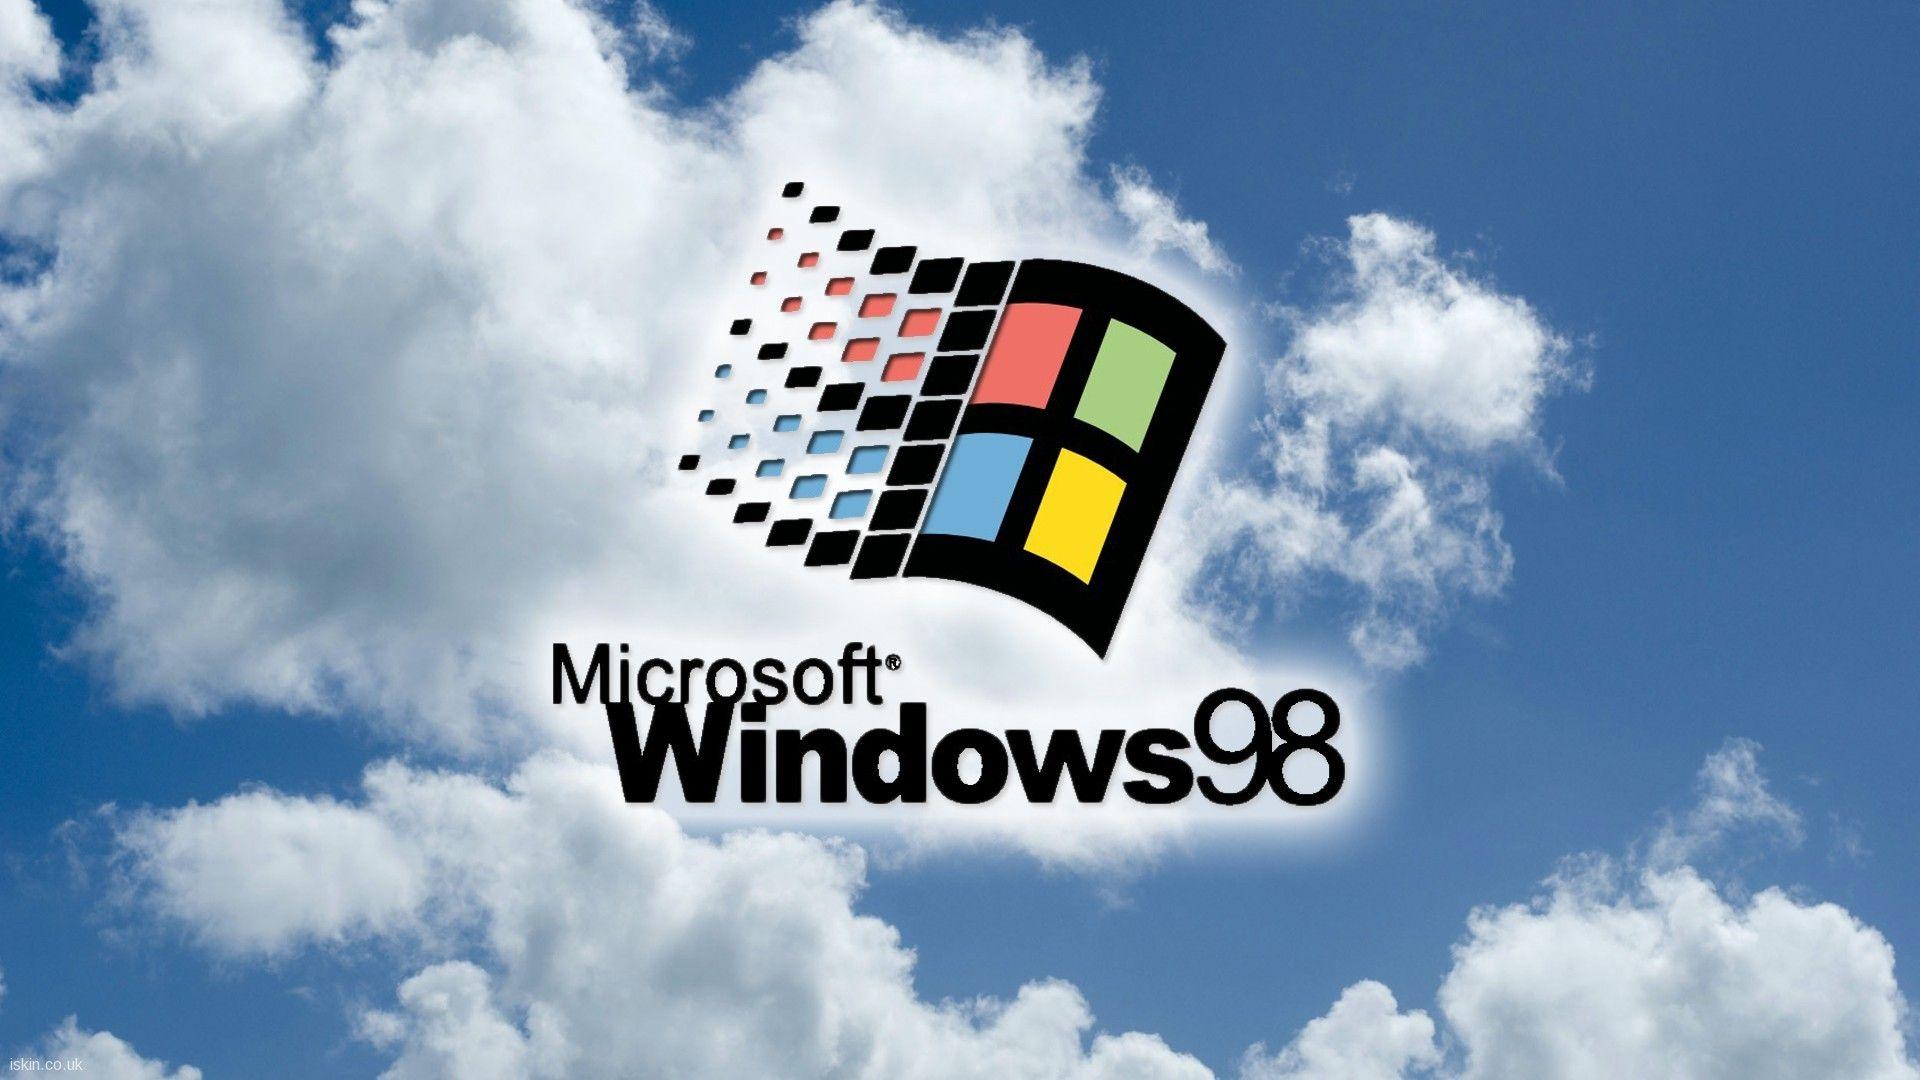 Microsoft Windows 98 Logo - Wallpaper : sky, logo, vintage, Microsoft Windows, brand, 90s ...